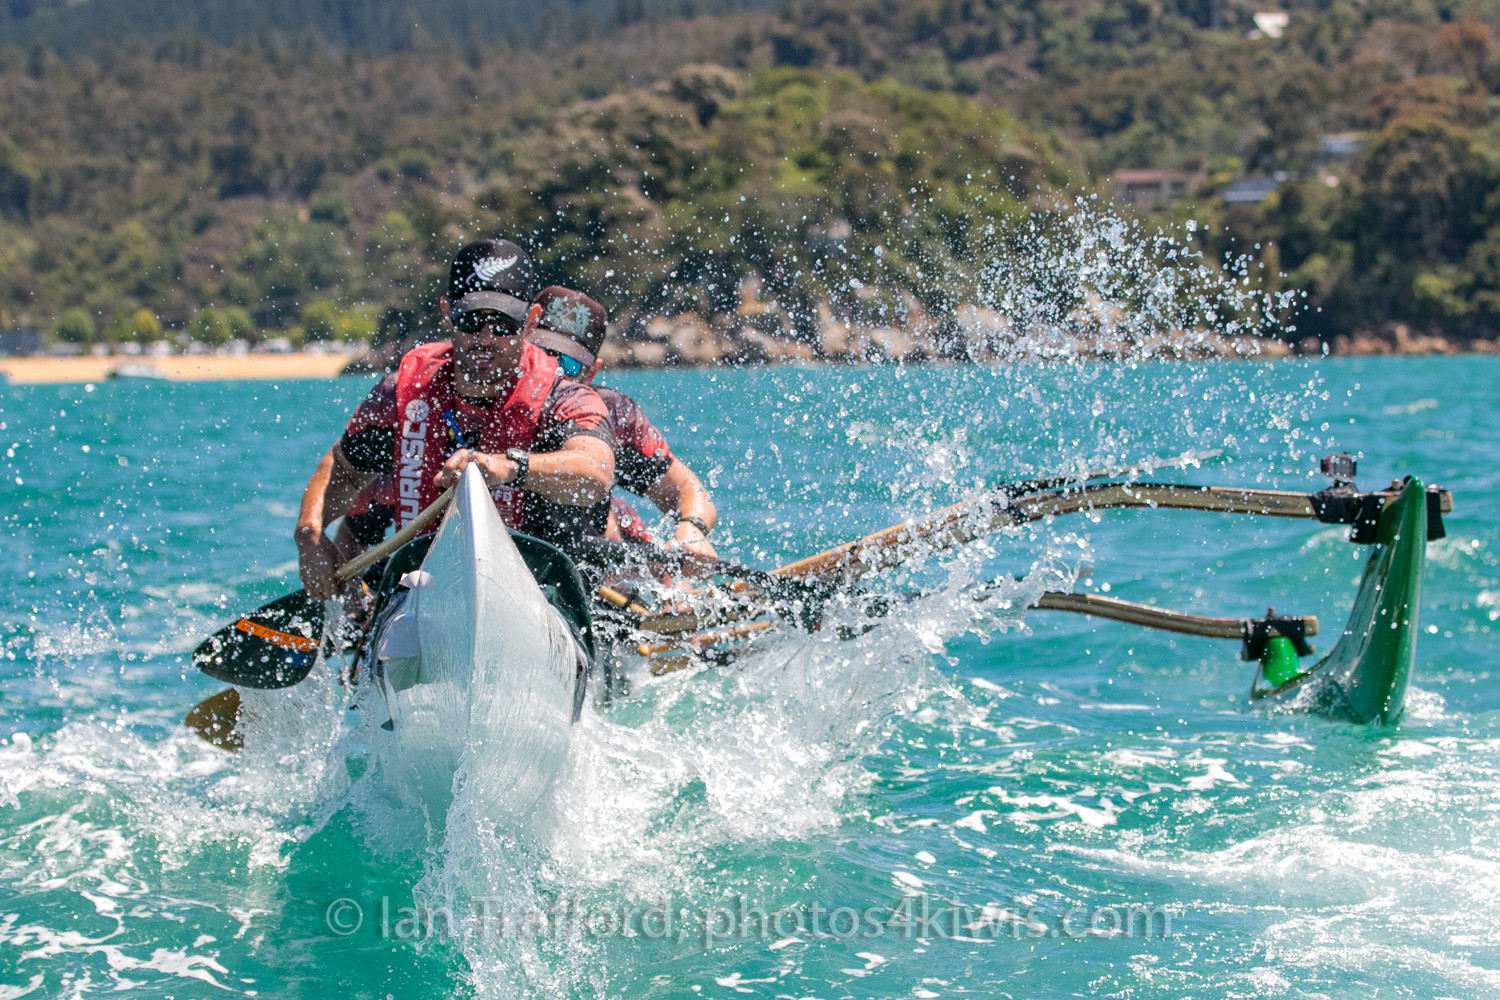 Waka Te Tasman Results and Photos online now